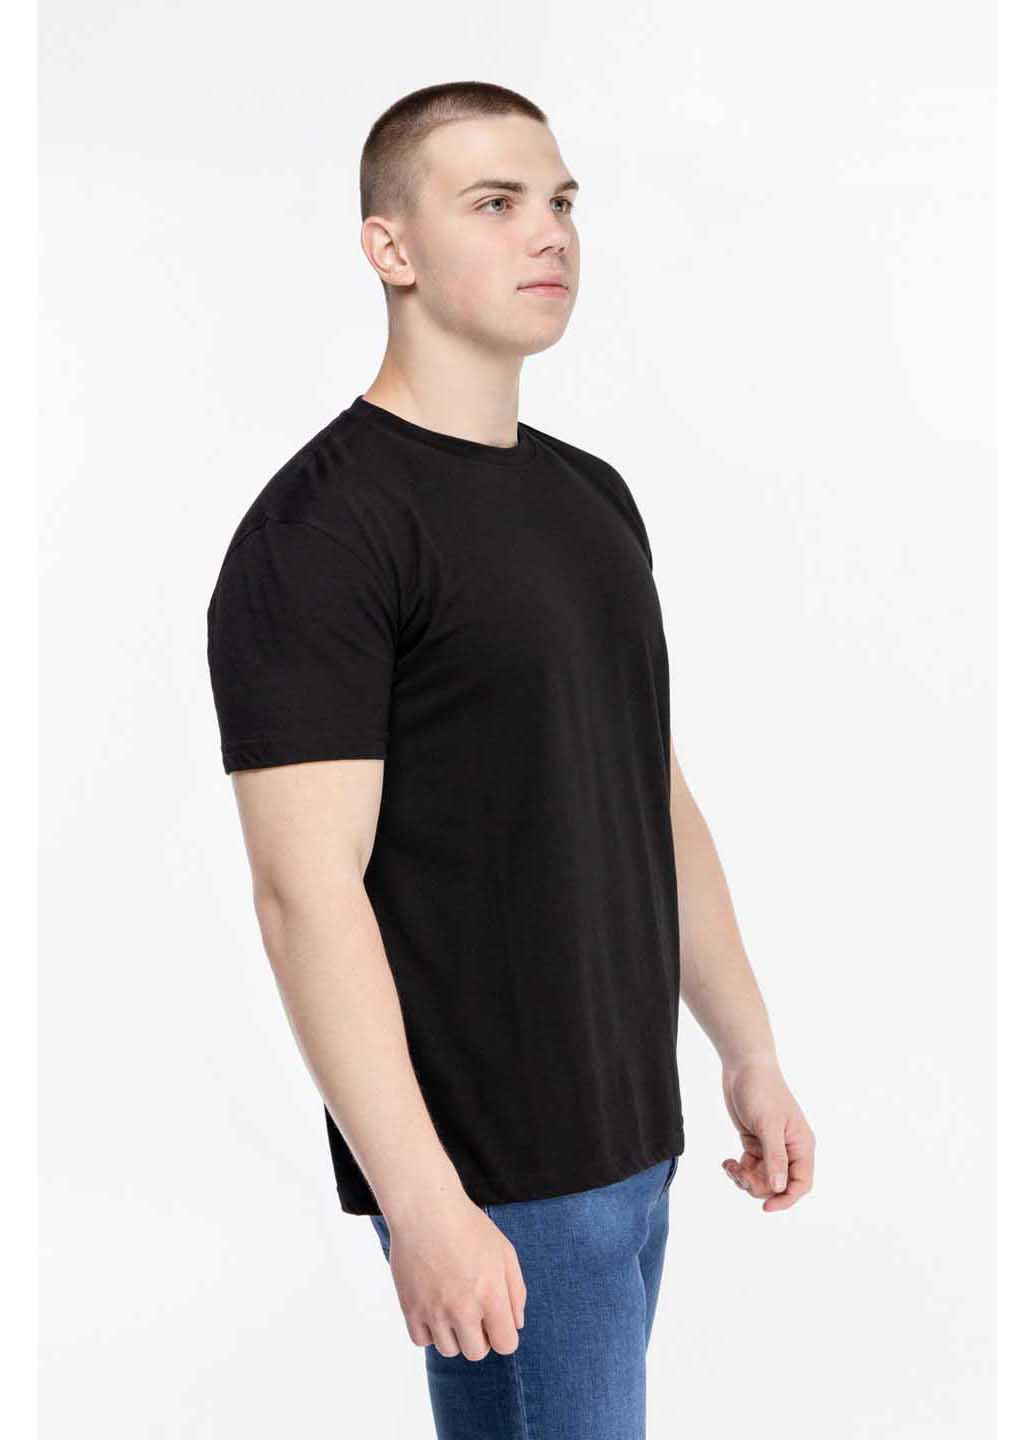 Черная футболка однотонная Stendo